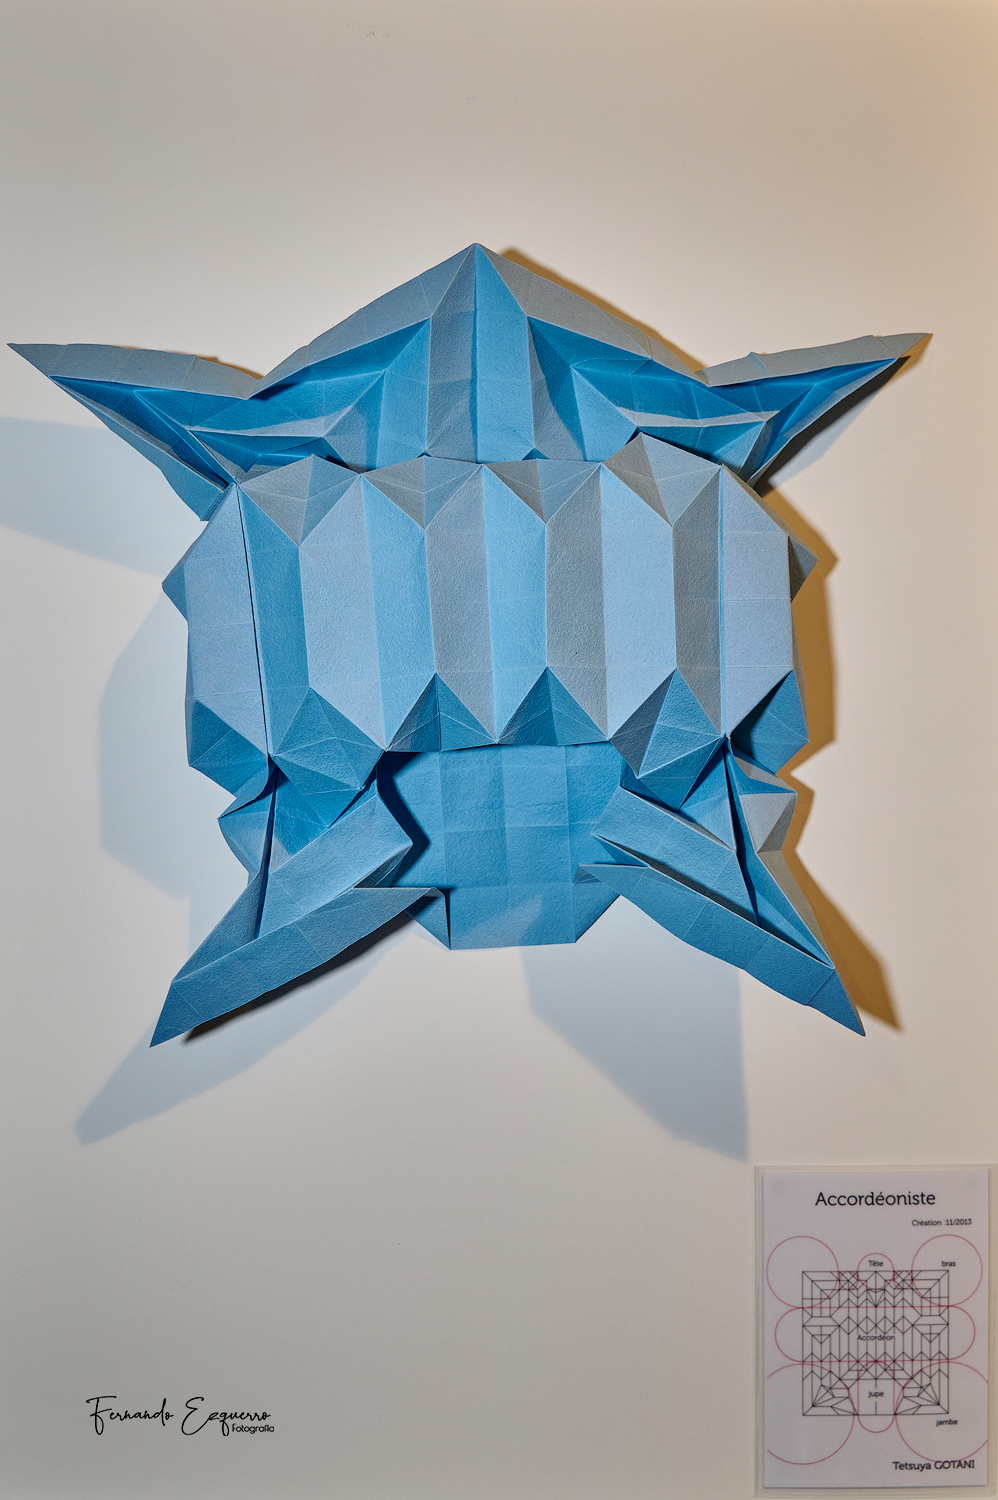 Escuela Museo Origami Zaragoza (EMOZ)